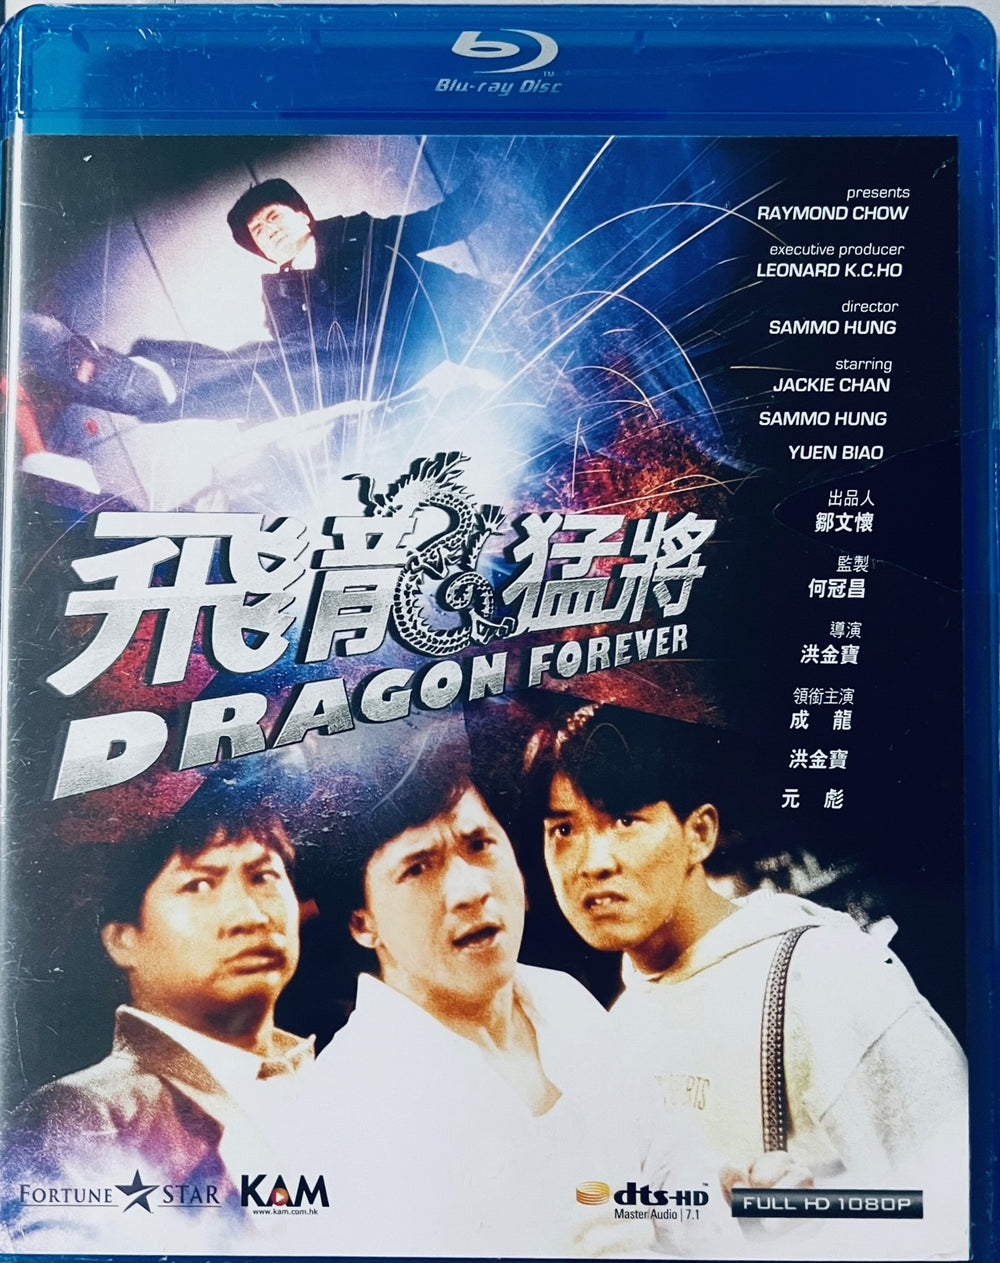 Dragon Forever 飛龍猛將 1988 (Hong Kong Movie) BLU-RAY with English Subtitles (Region A)